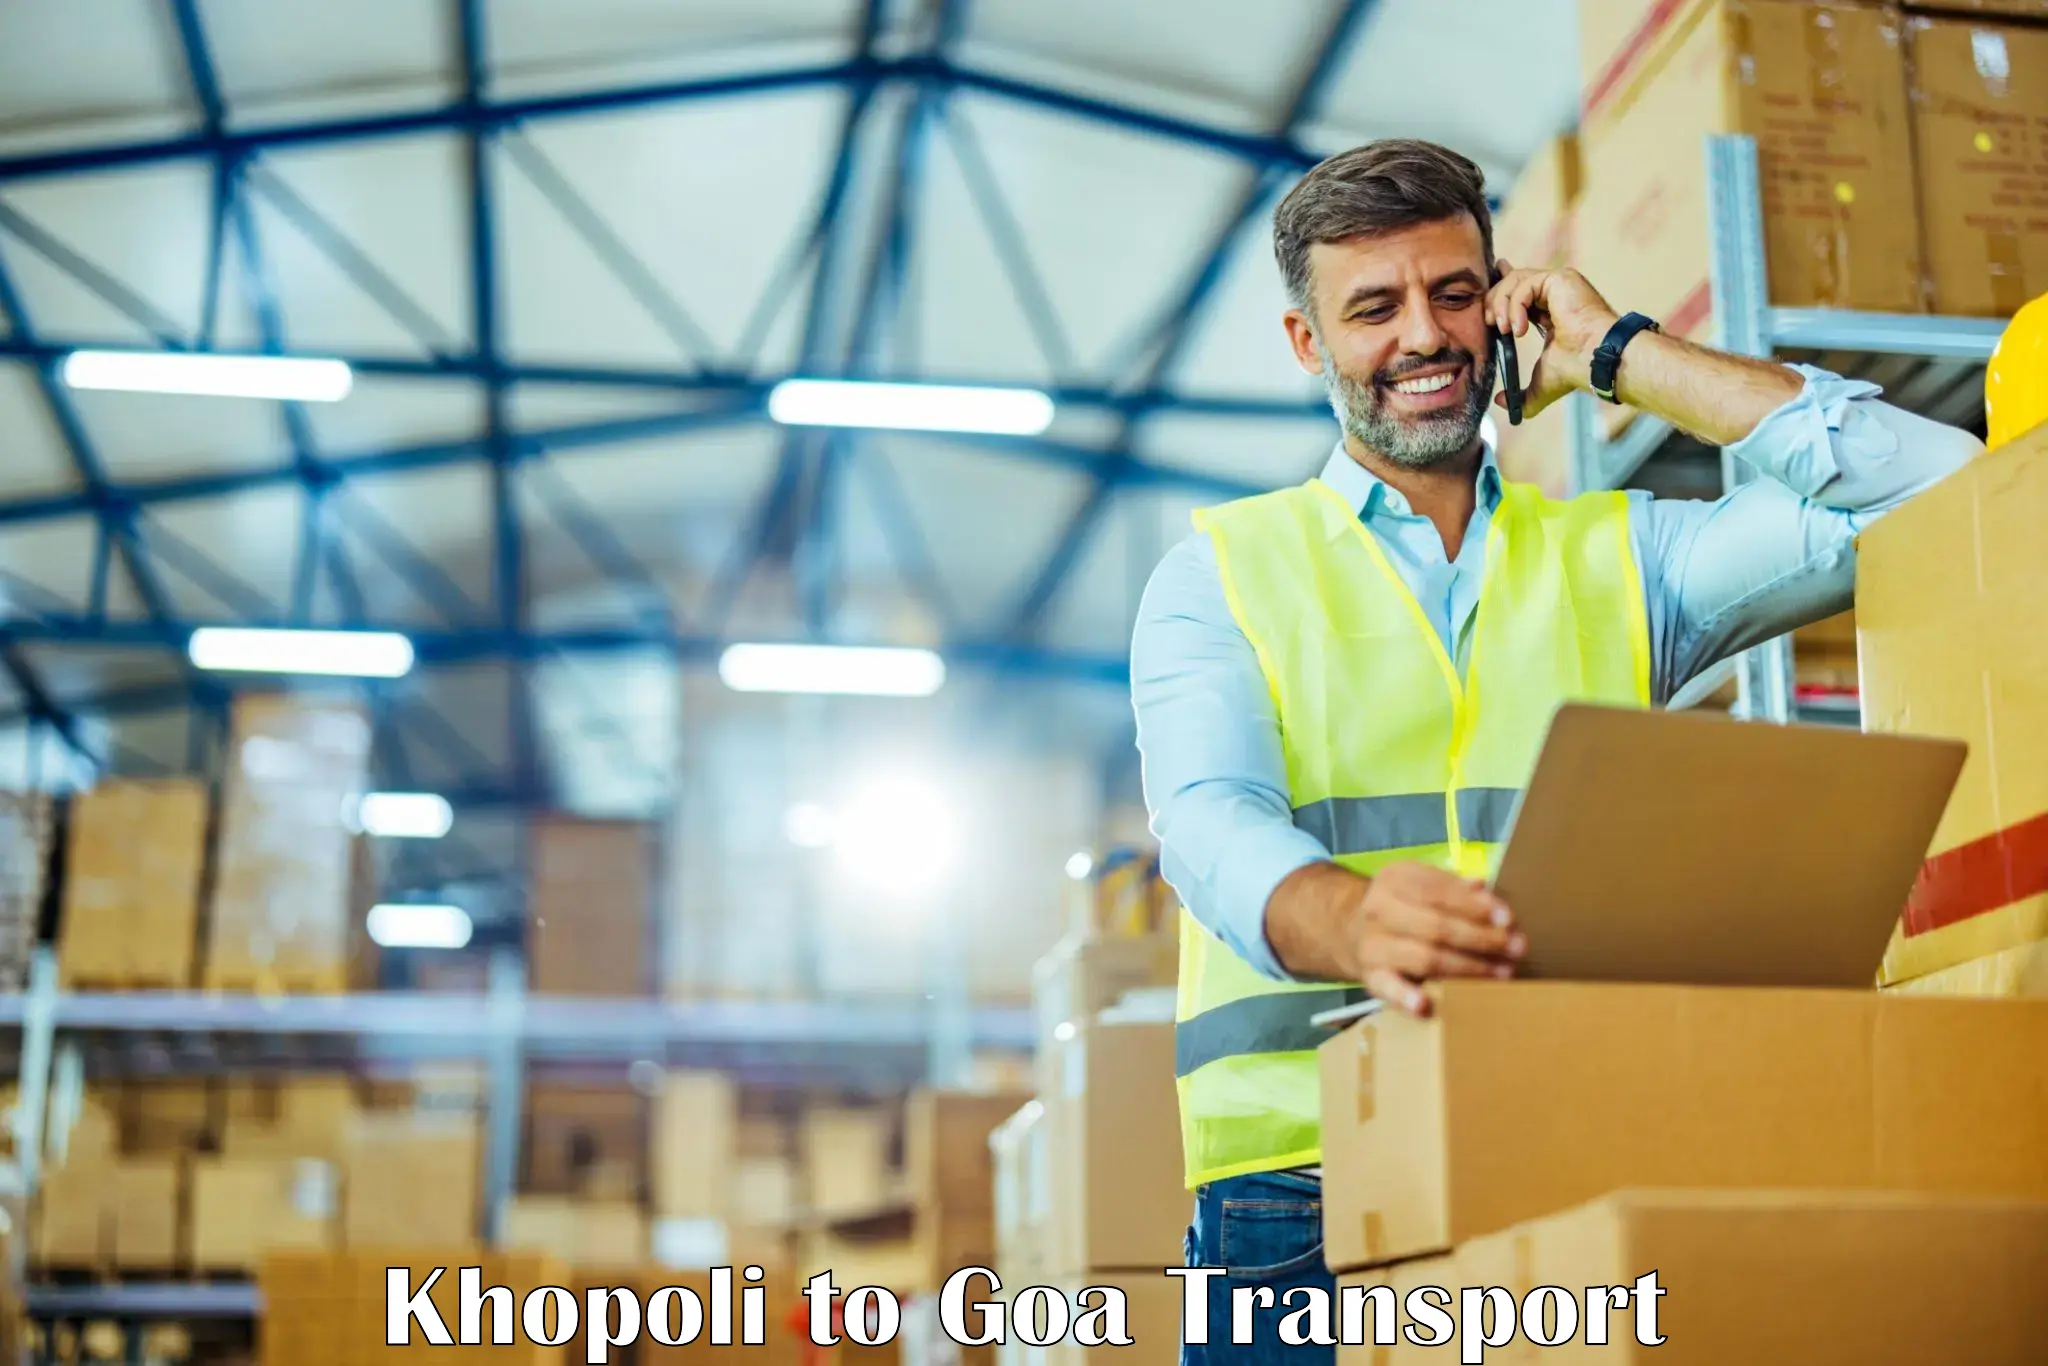 Goods delivery service Khopoli to Goa